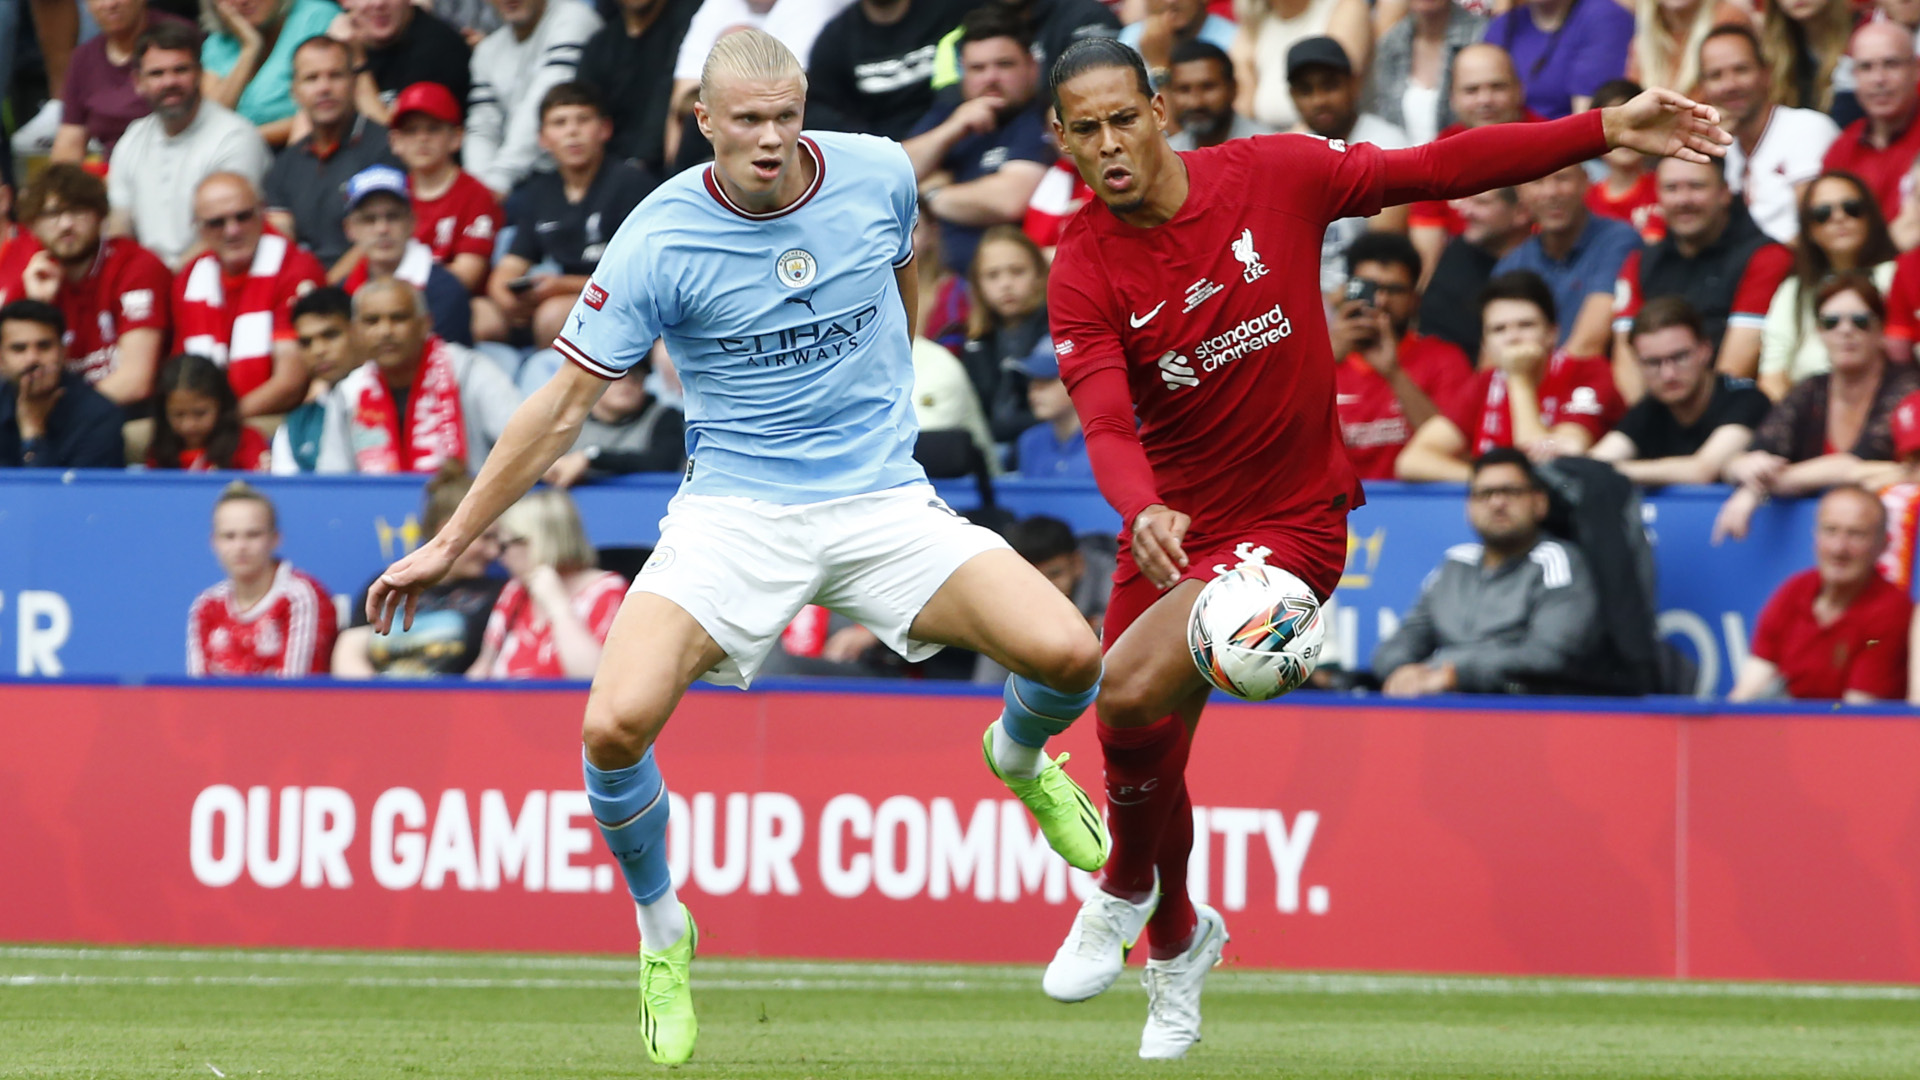 Man City vs. Liverpool Livestream: How to Watch English Premier